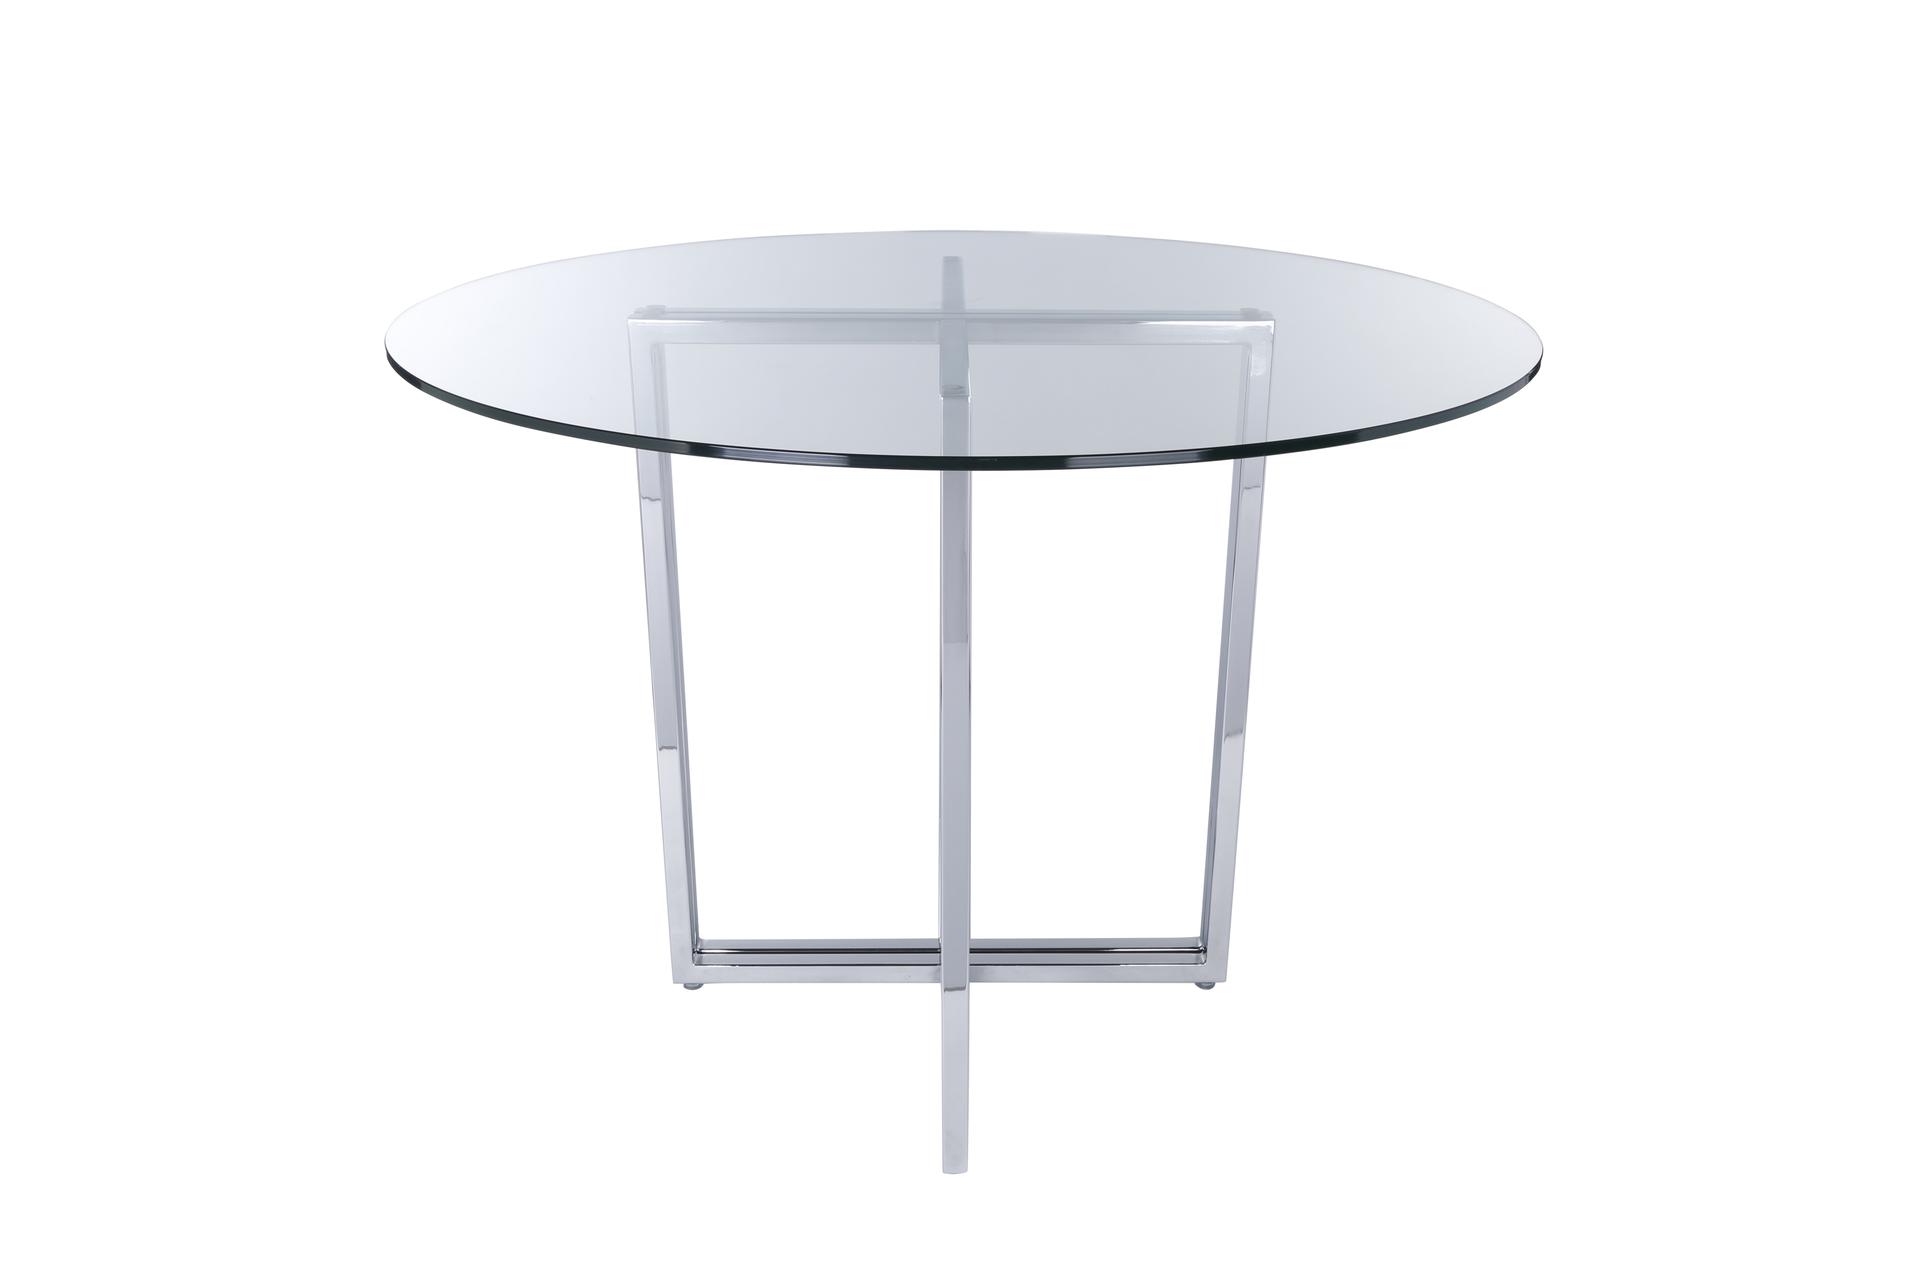 36 inch round glass kitchen table